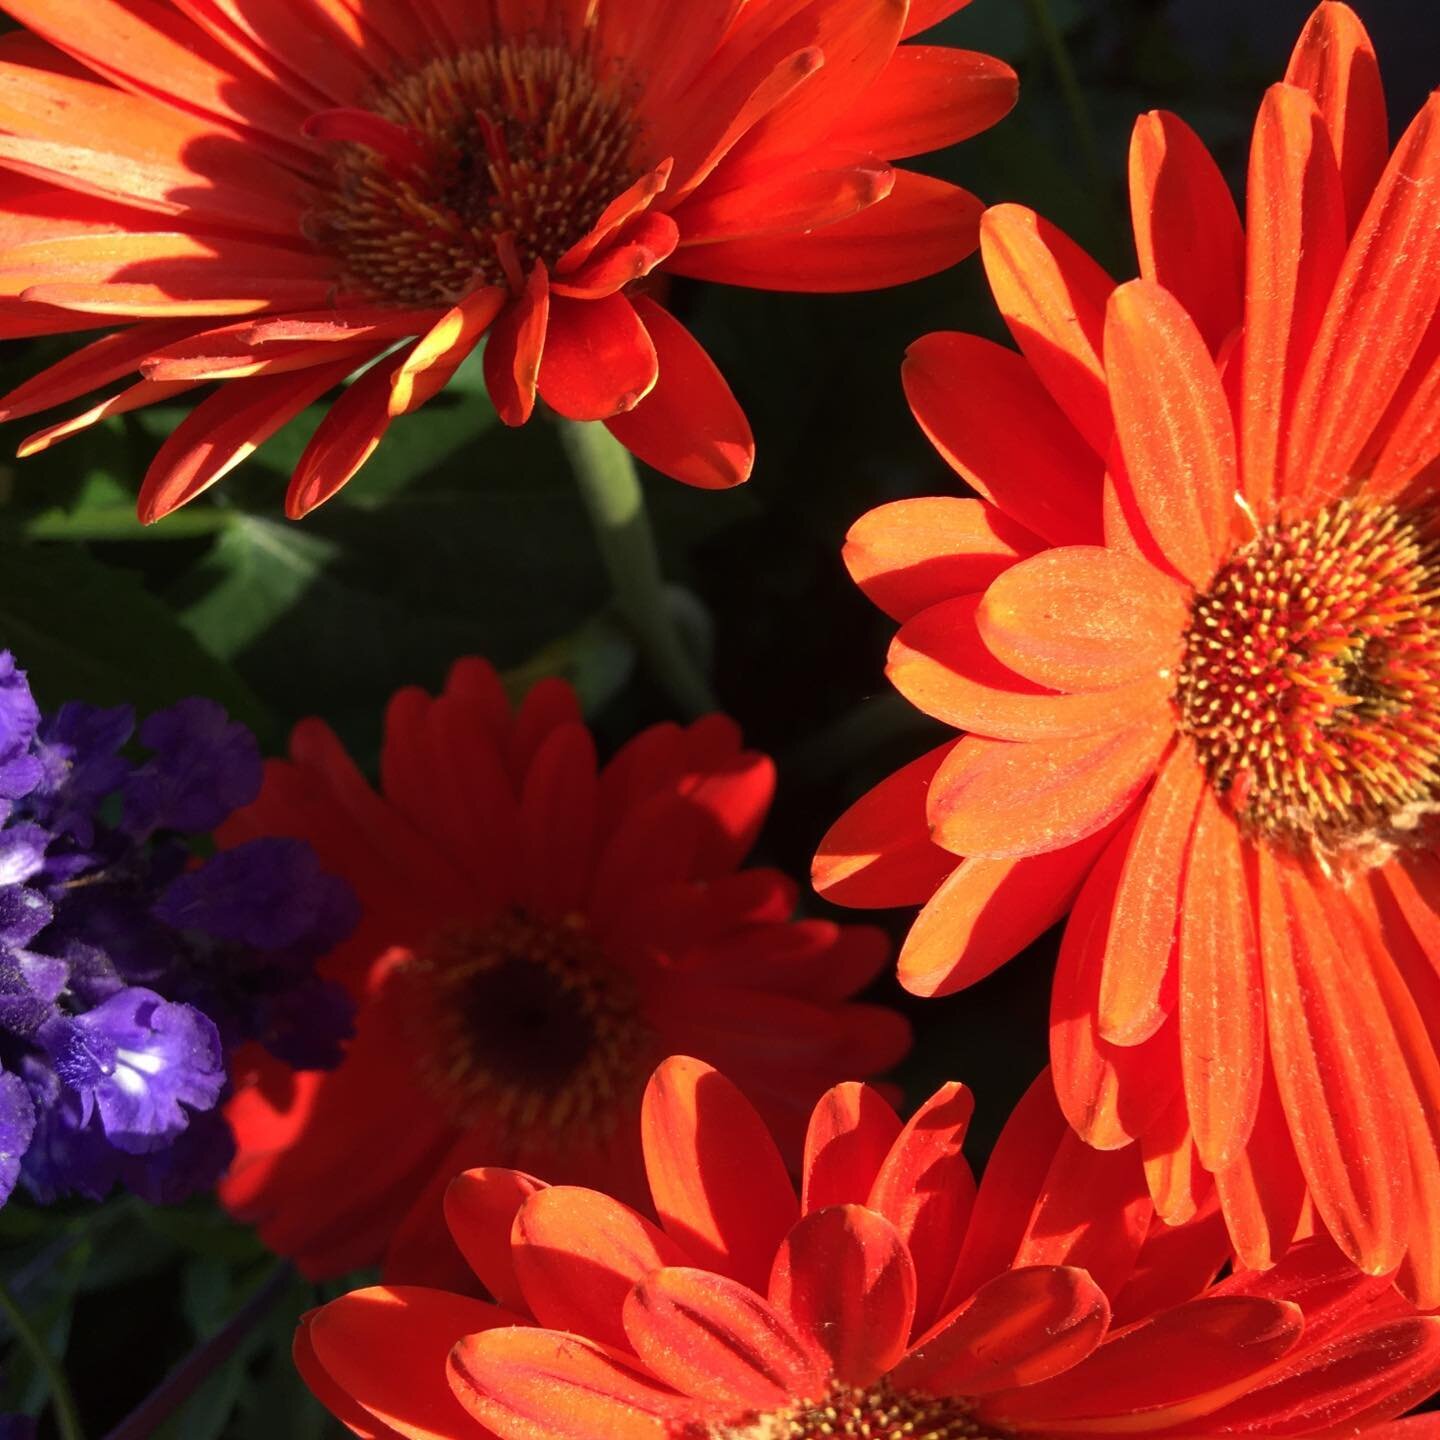 #orange Gerber daisy loves black and blue salvia #plant a Gerber daisy in your garden# Gerber daisy says love